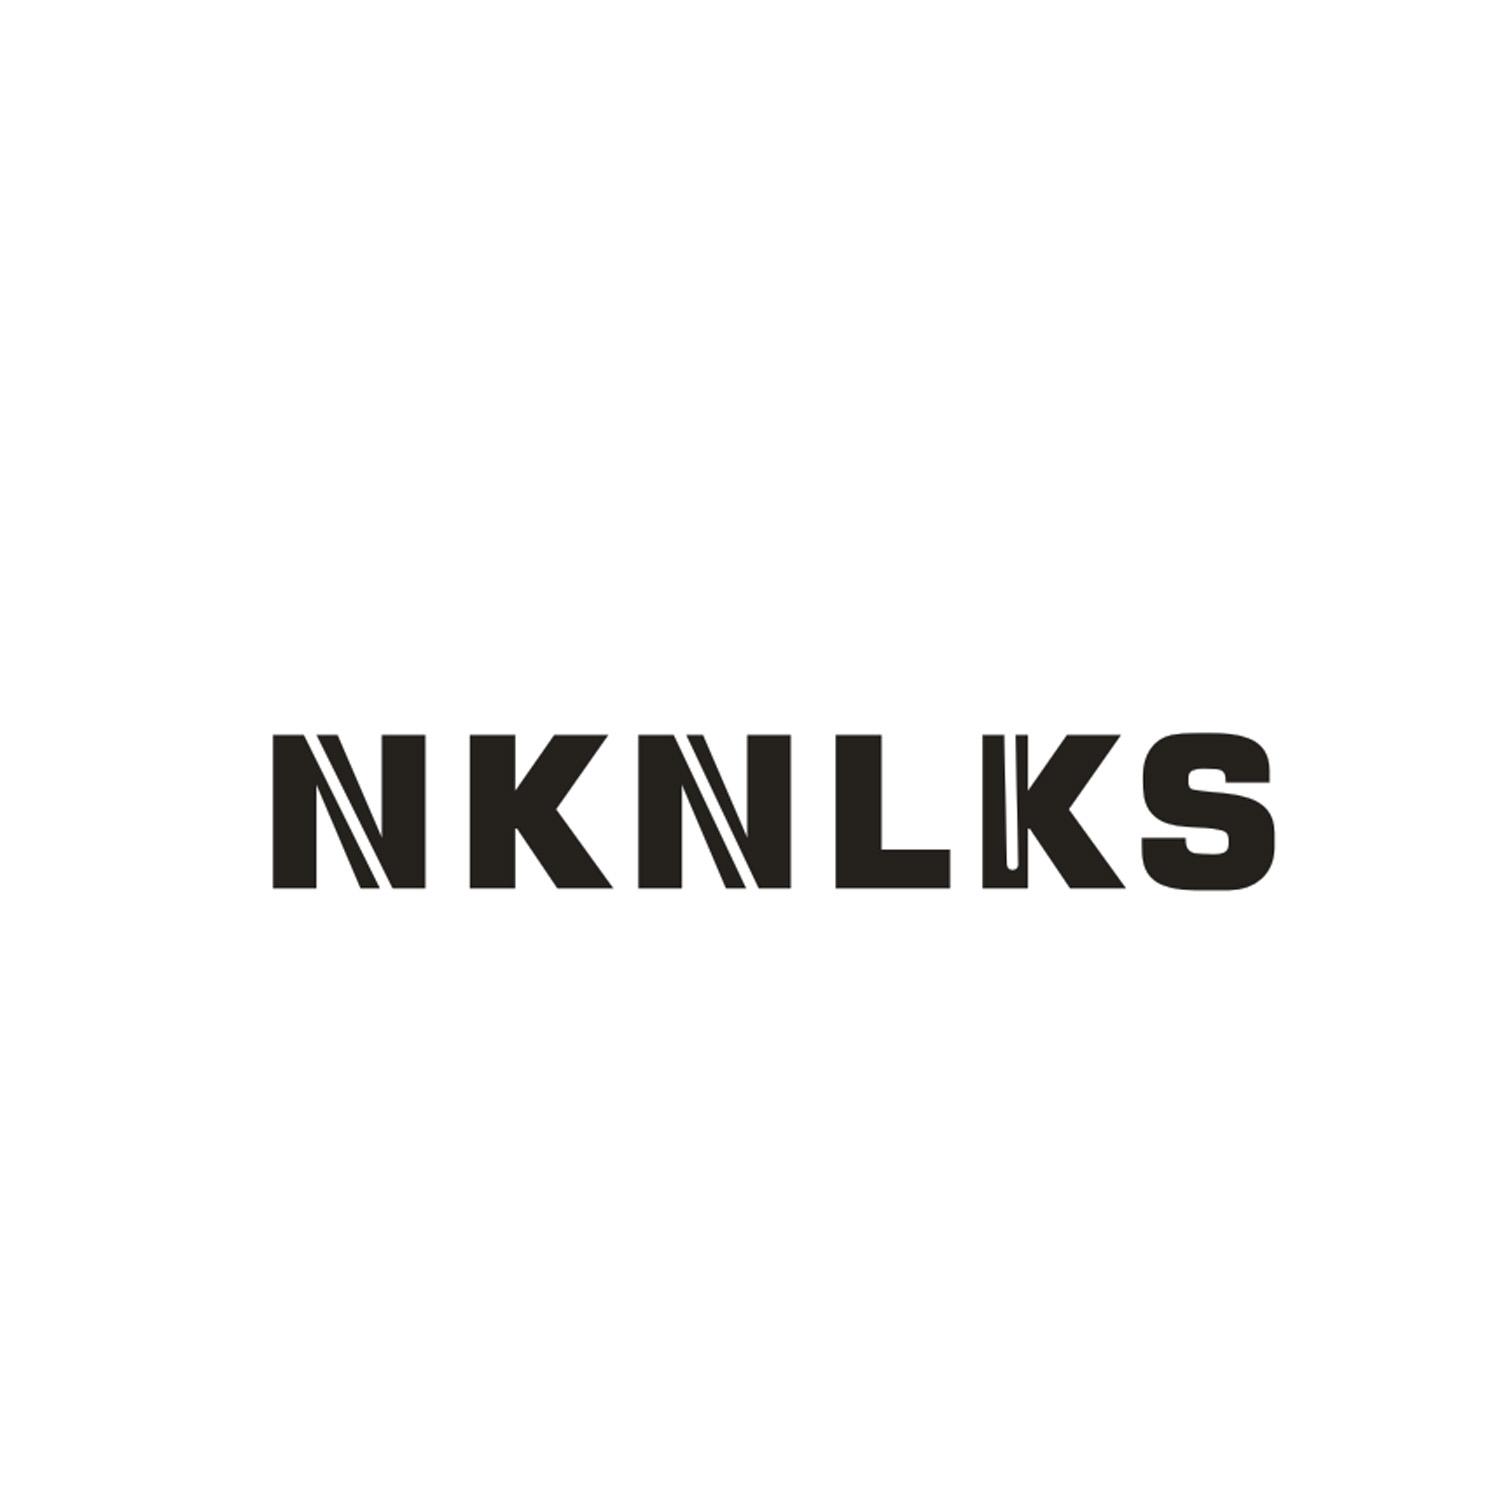 NKNLKS市场分析商标转让费用买卖交易流程